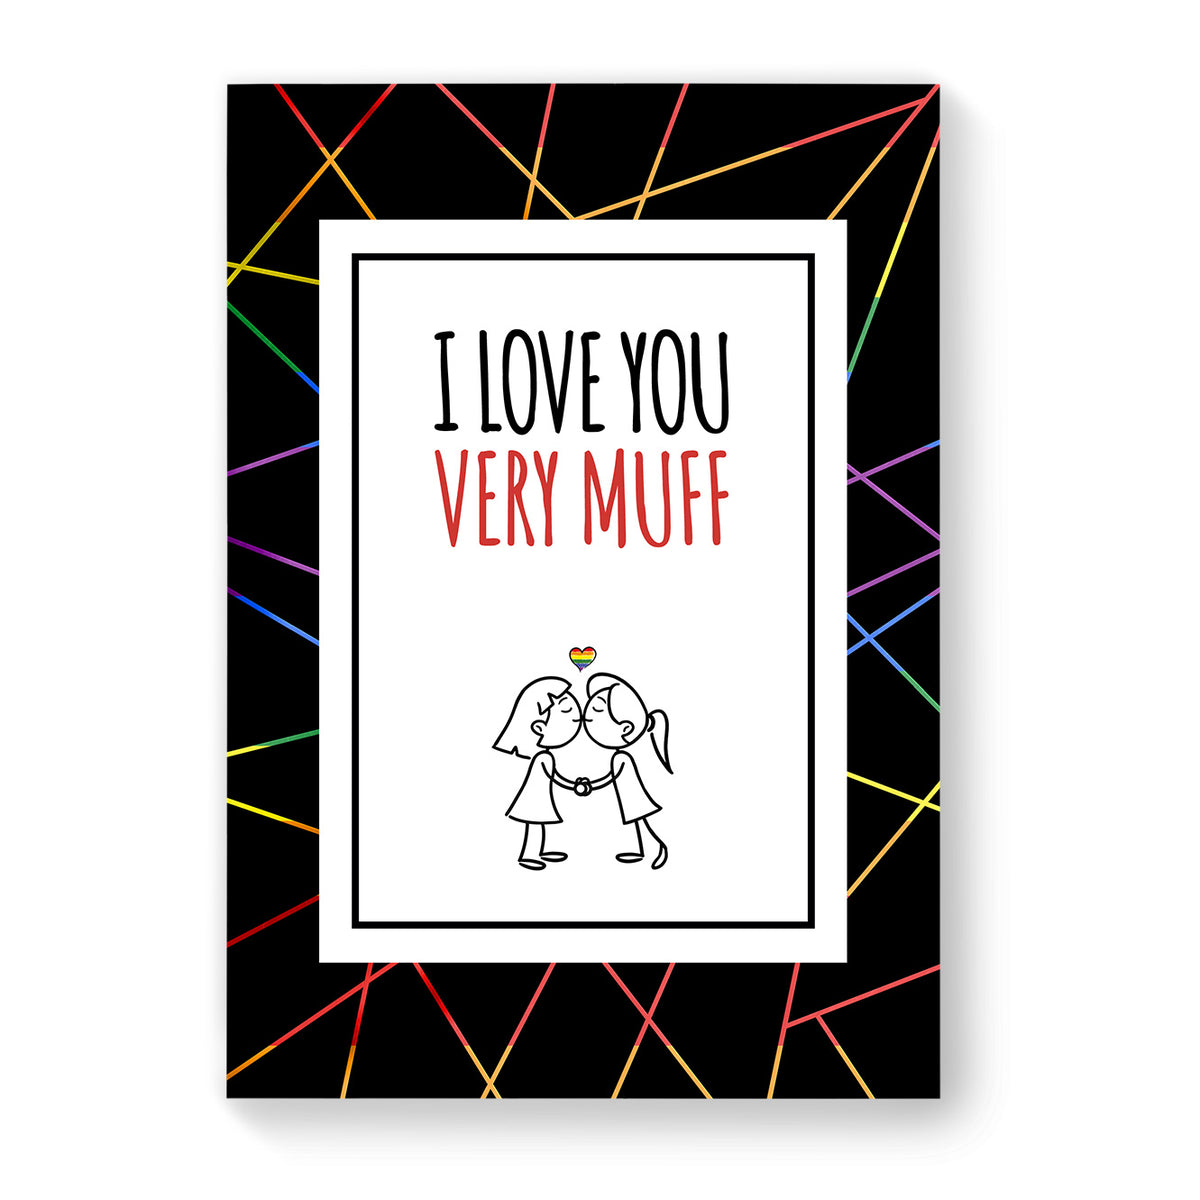 I love you very muff - Lesbian Gay Couple Card - Black Geometric | Gift